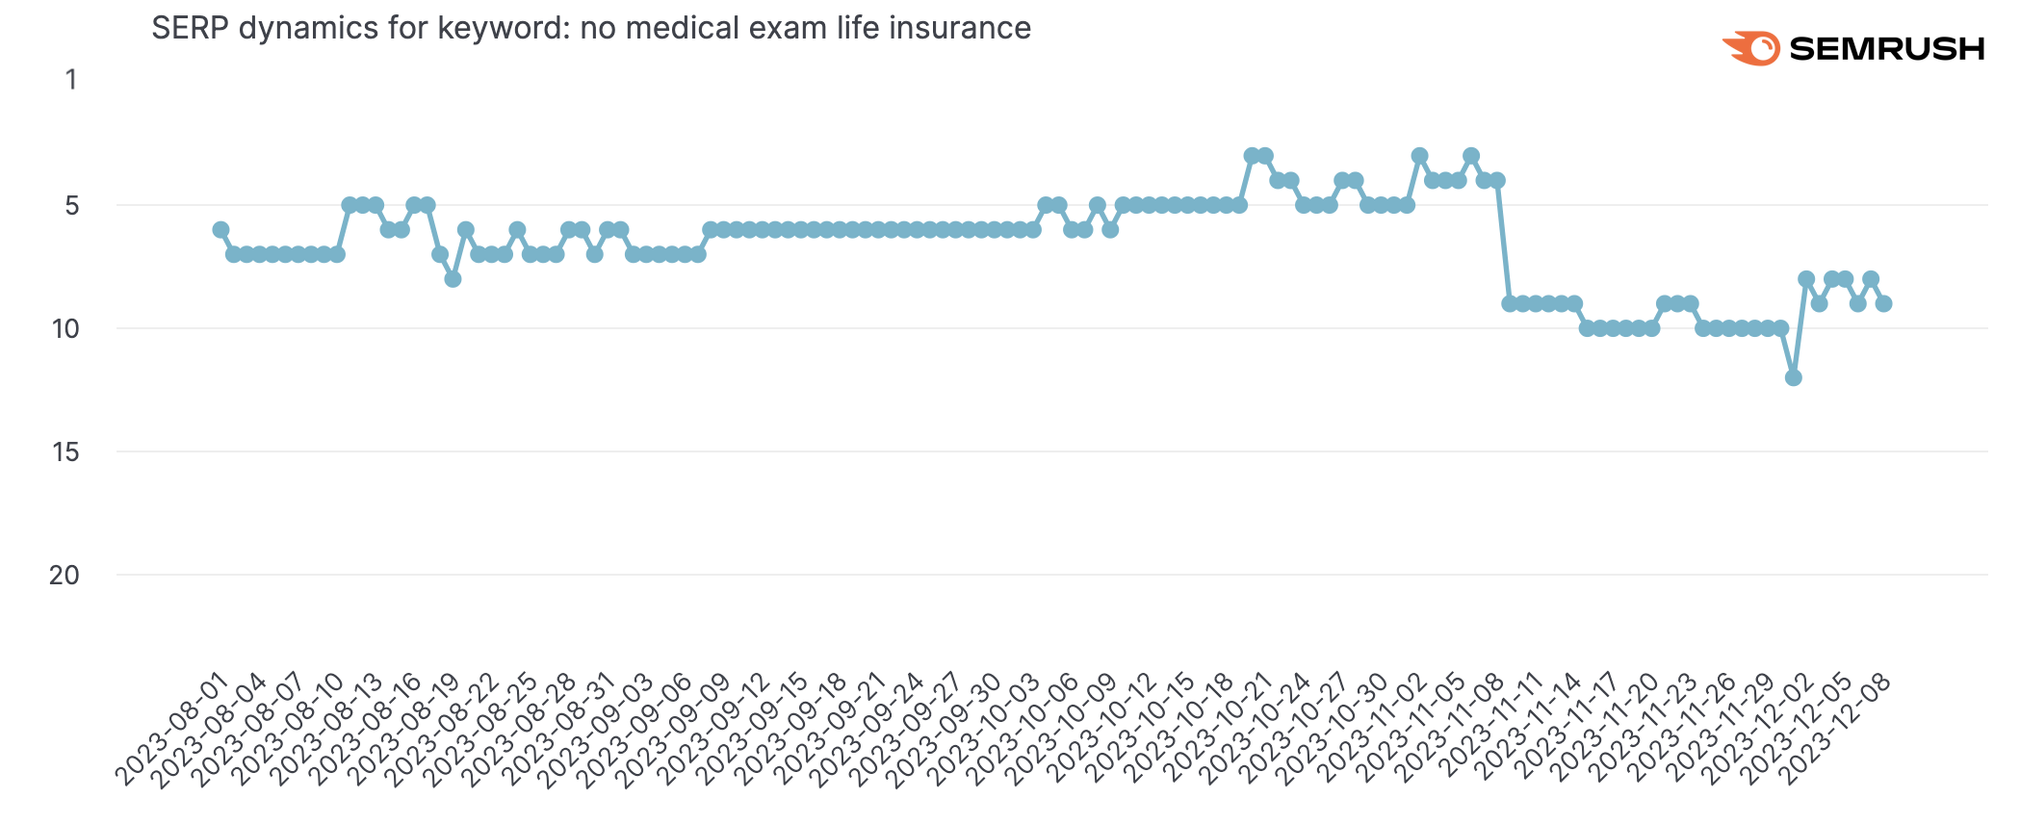 SERP dynamics for keywords: no medical exam life insurance